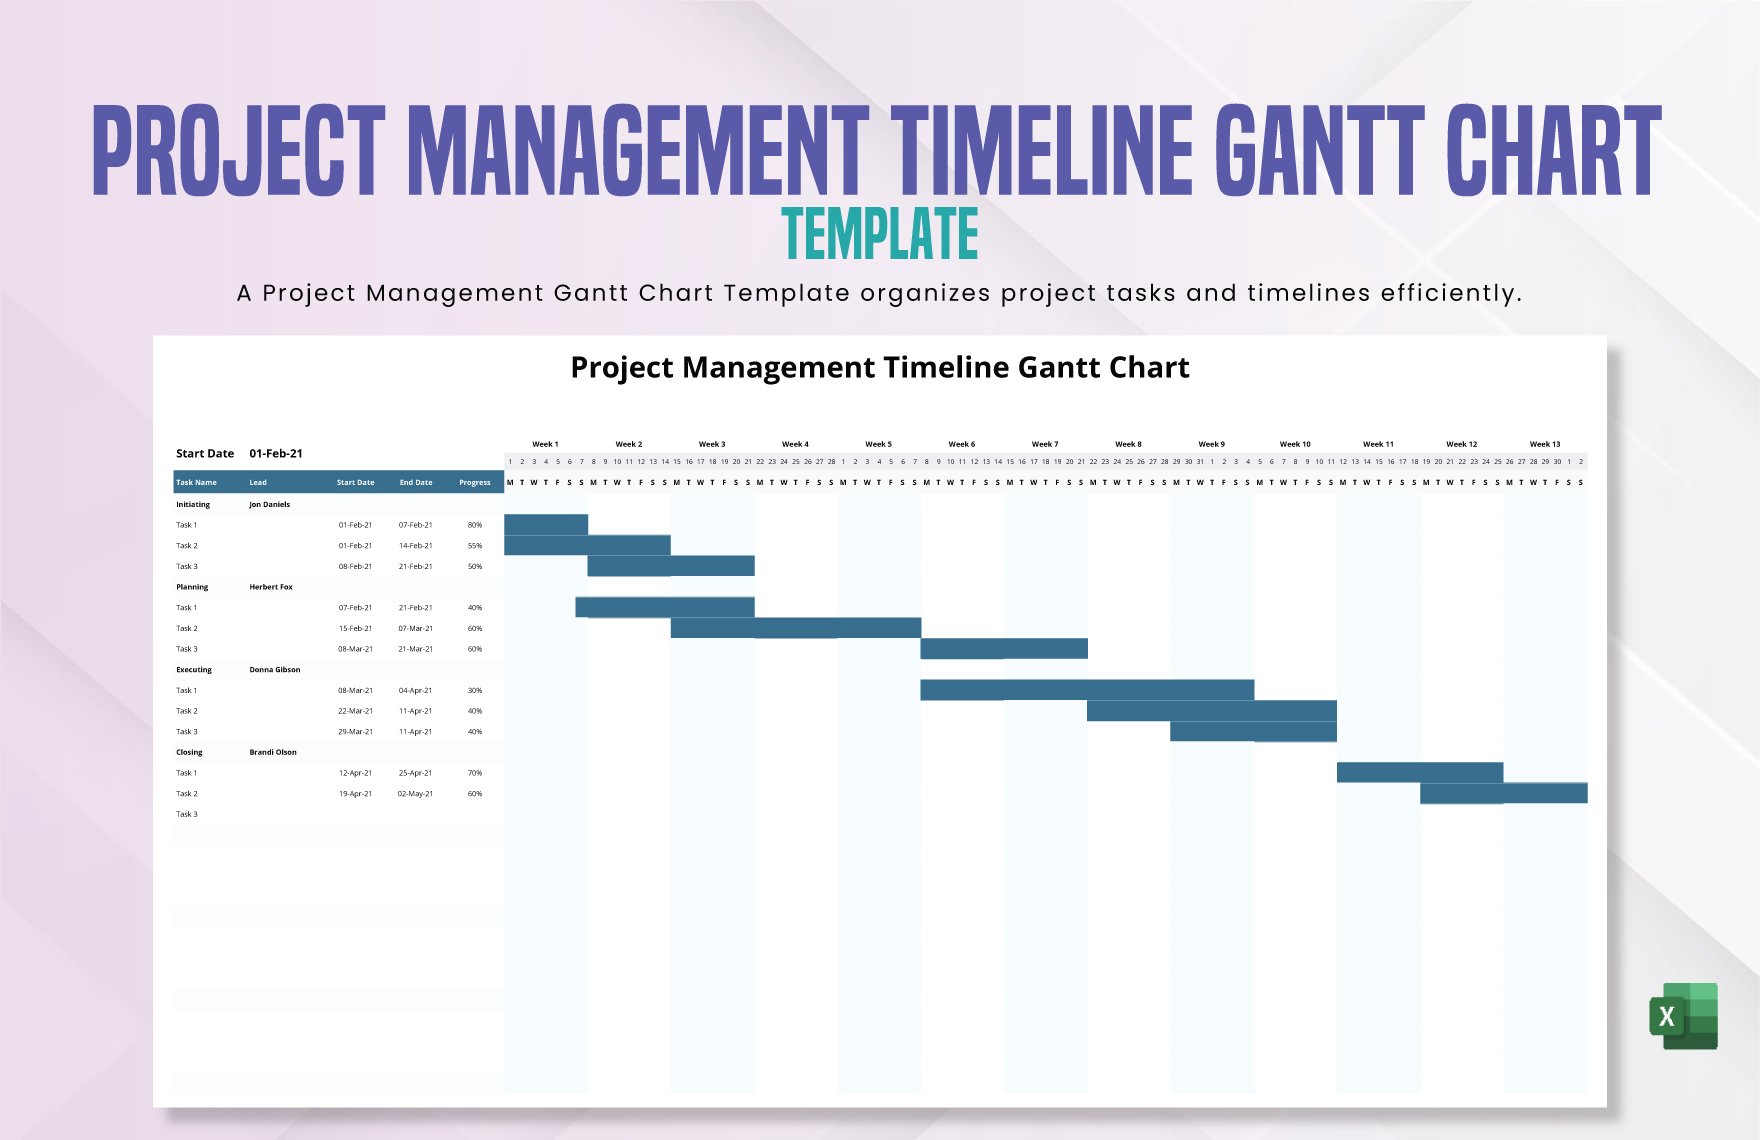 Project Management Timeline Gantt Chart Template in Excel